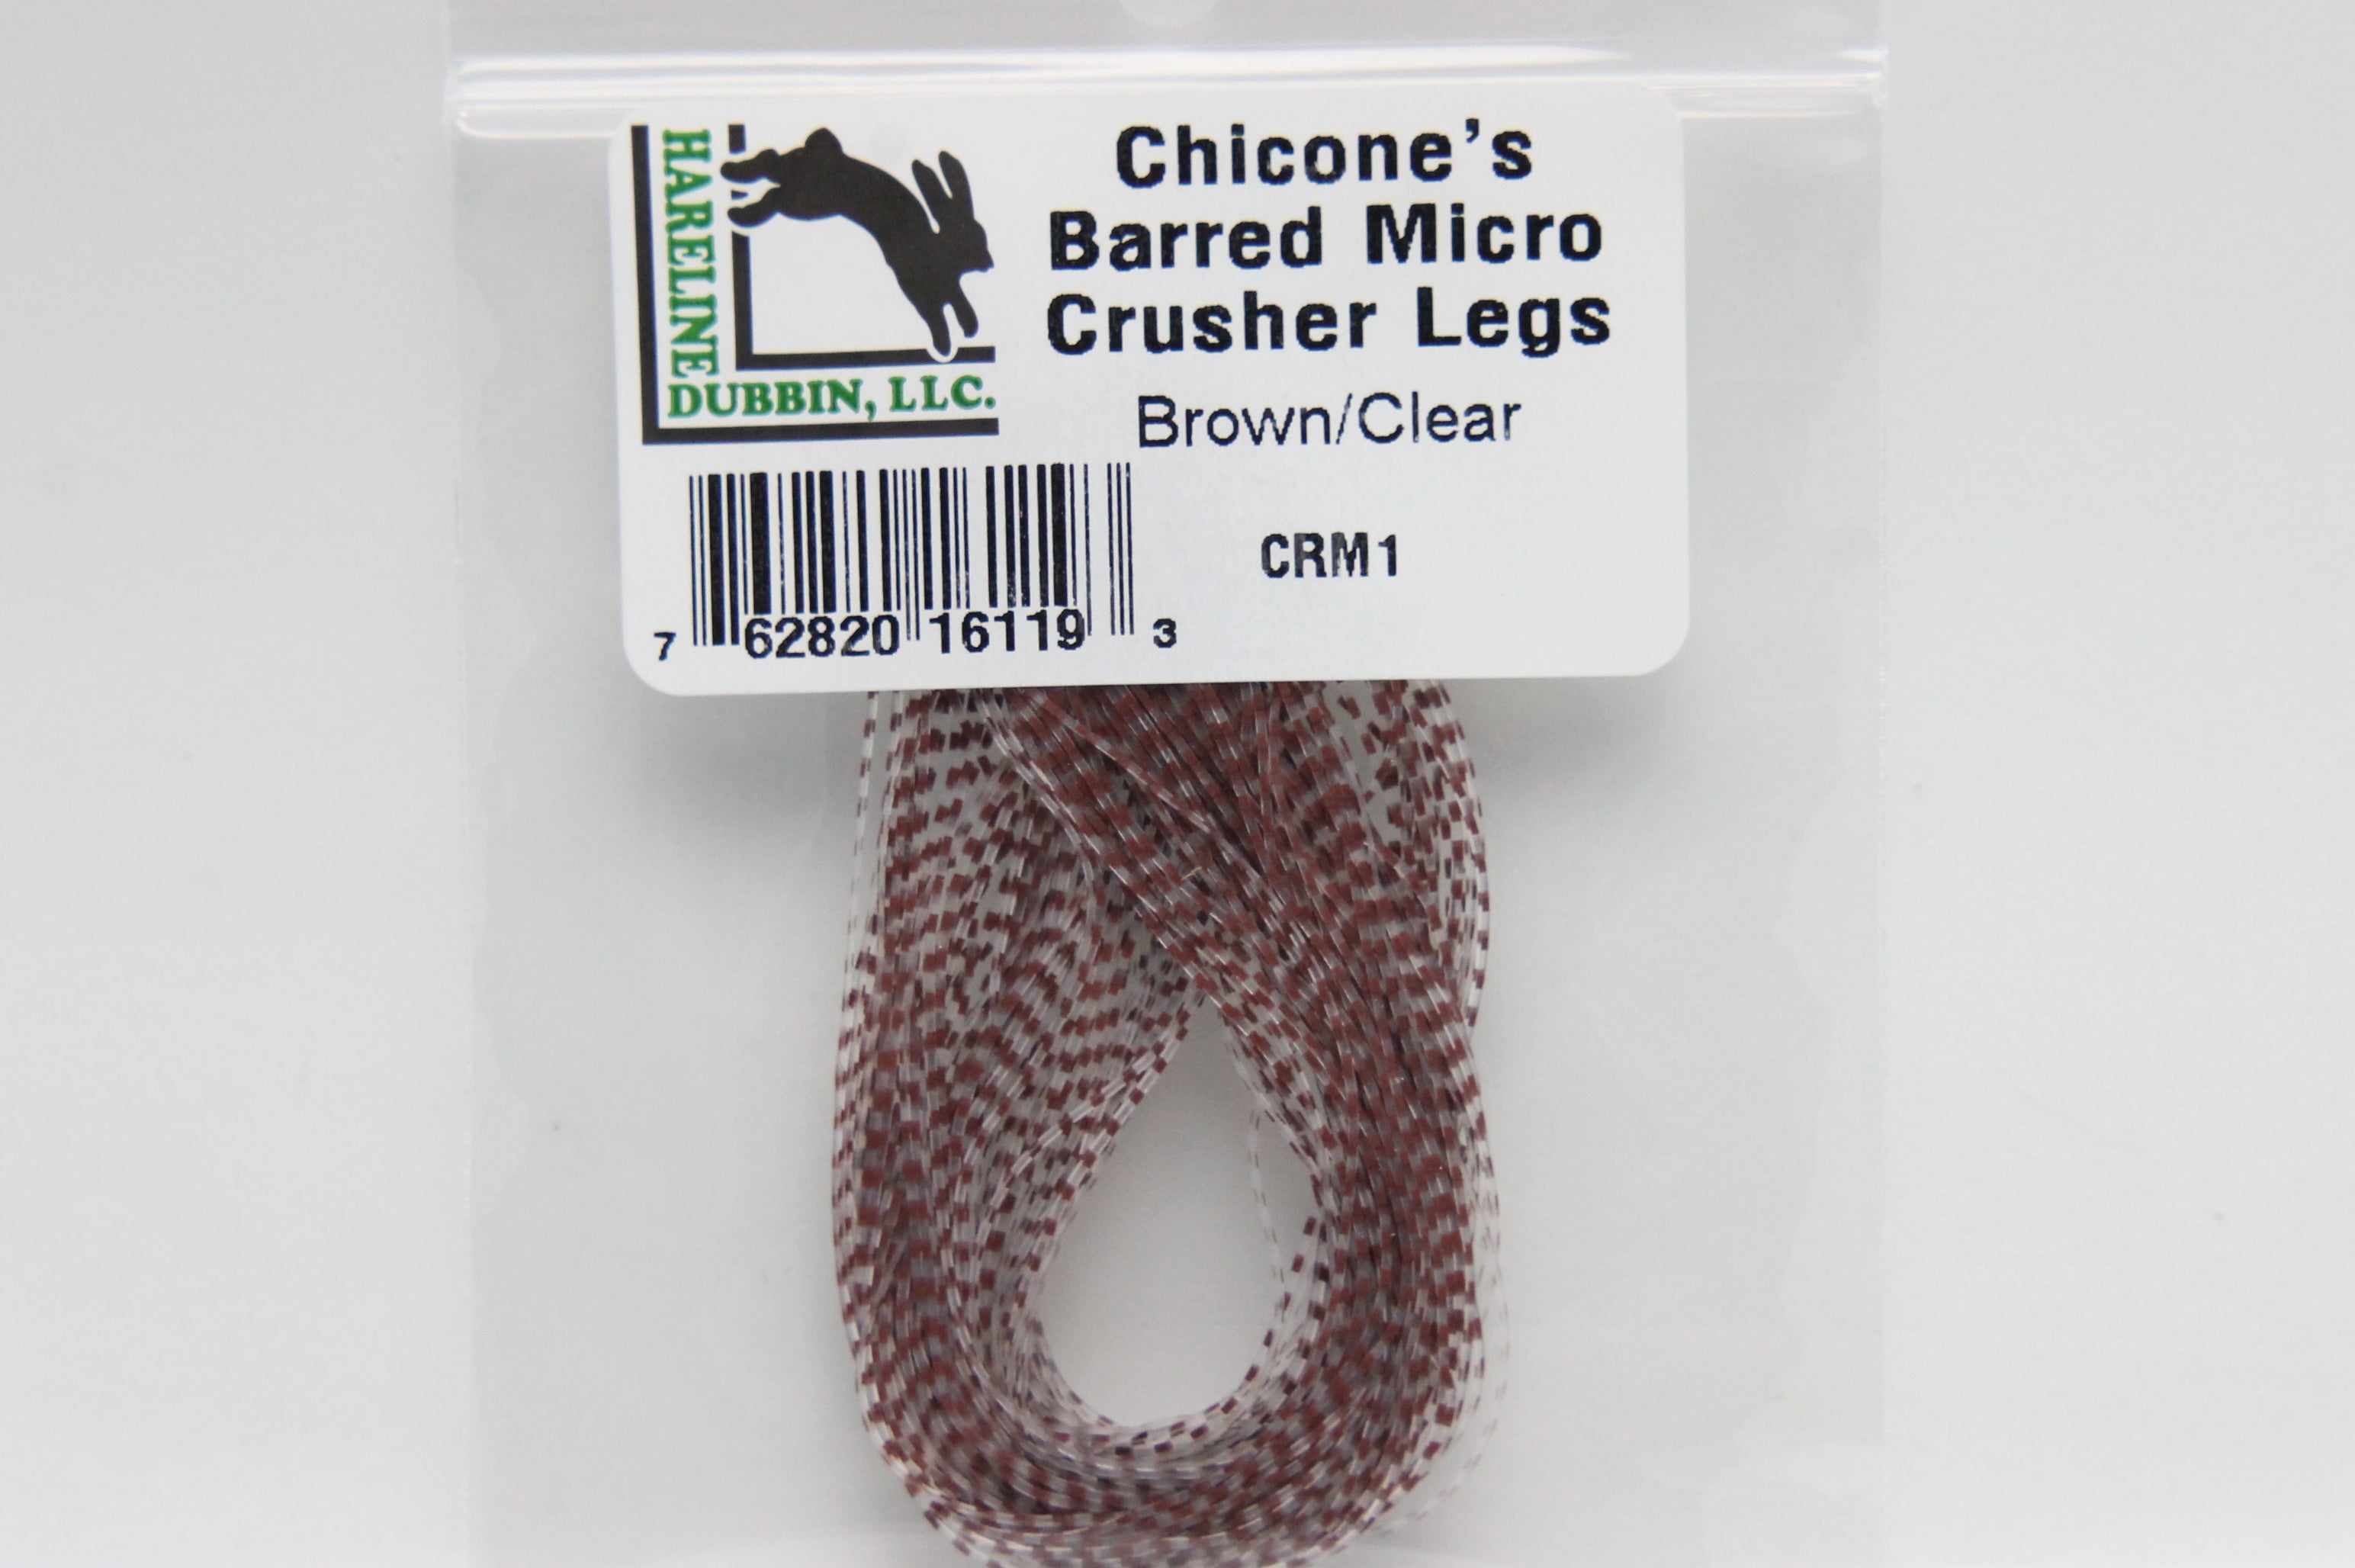 Chicone's Barred Micro Crusher Legs